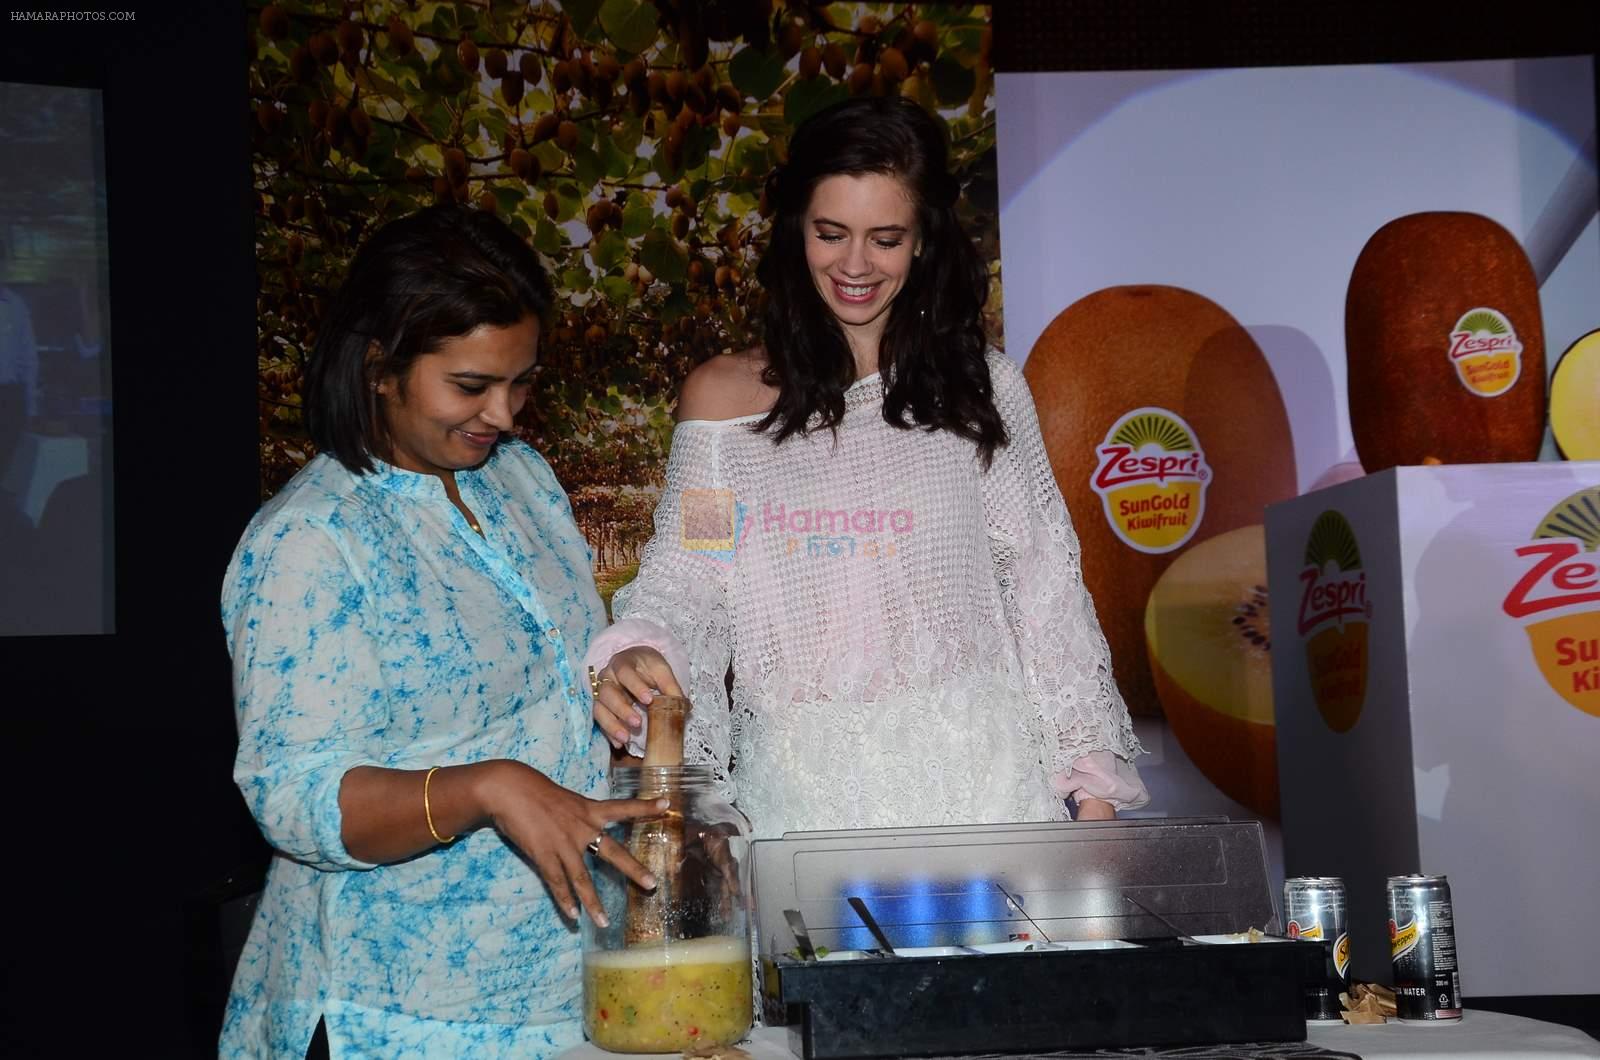 Kalki Koechlin at Kiwi fruit launch in Mumbai  on 28th May 2015